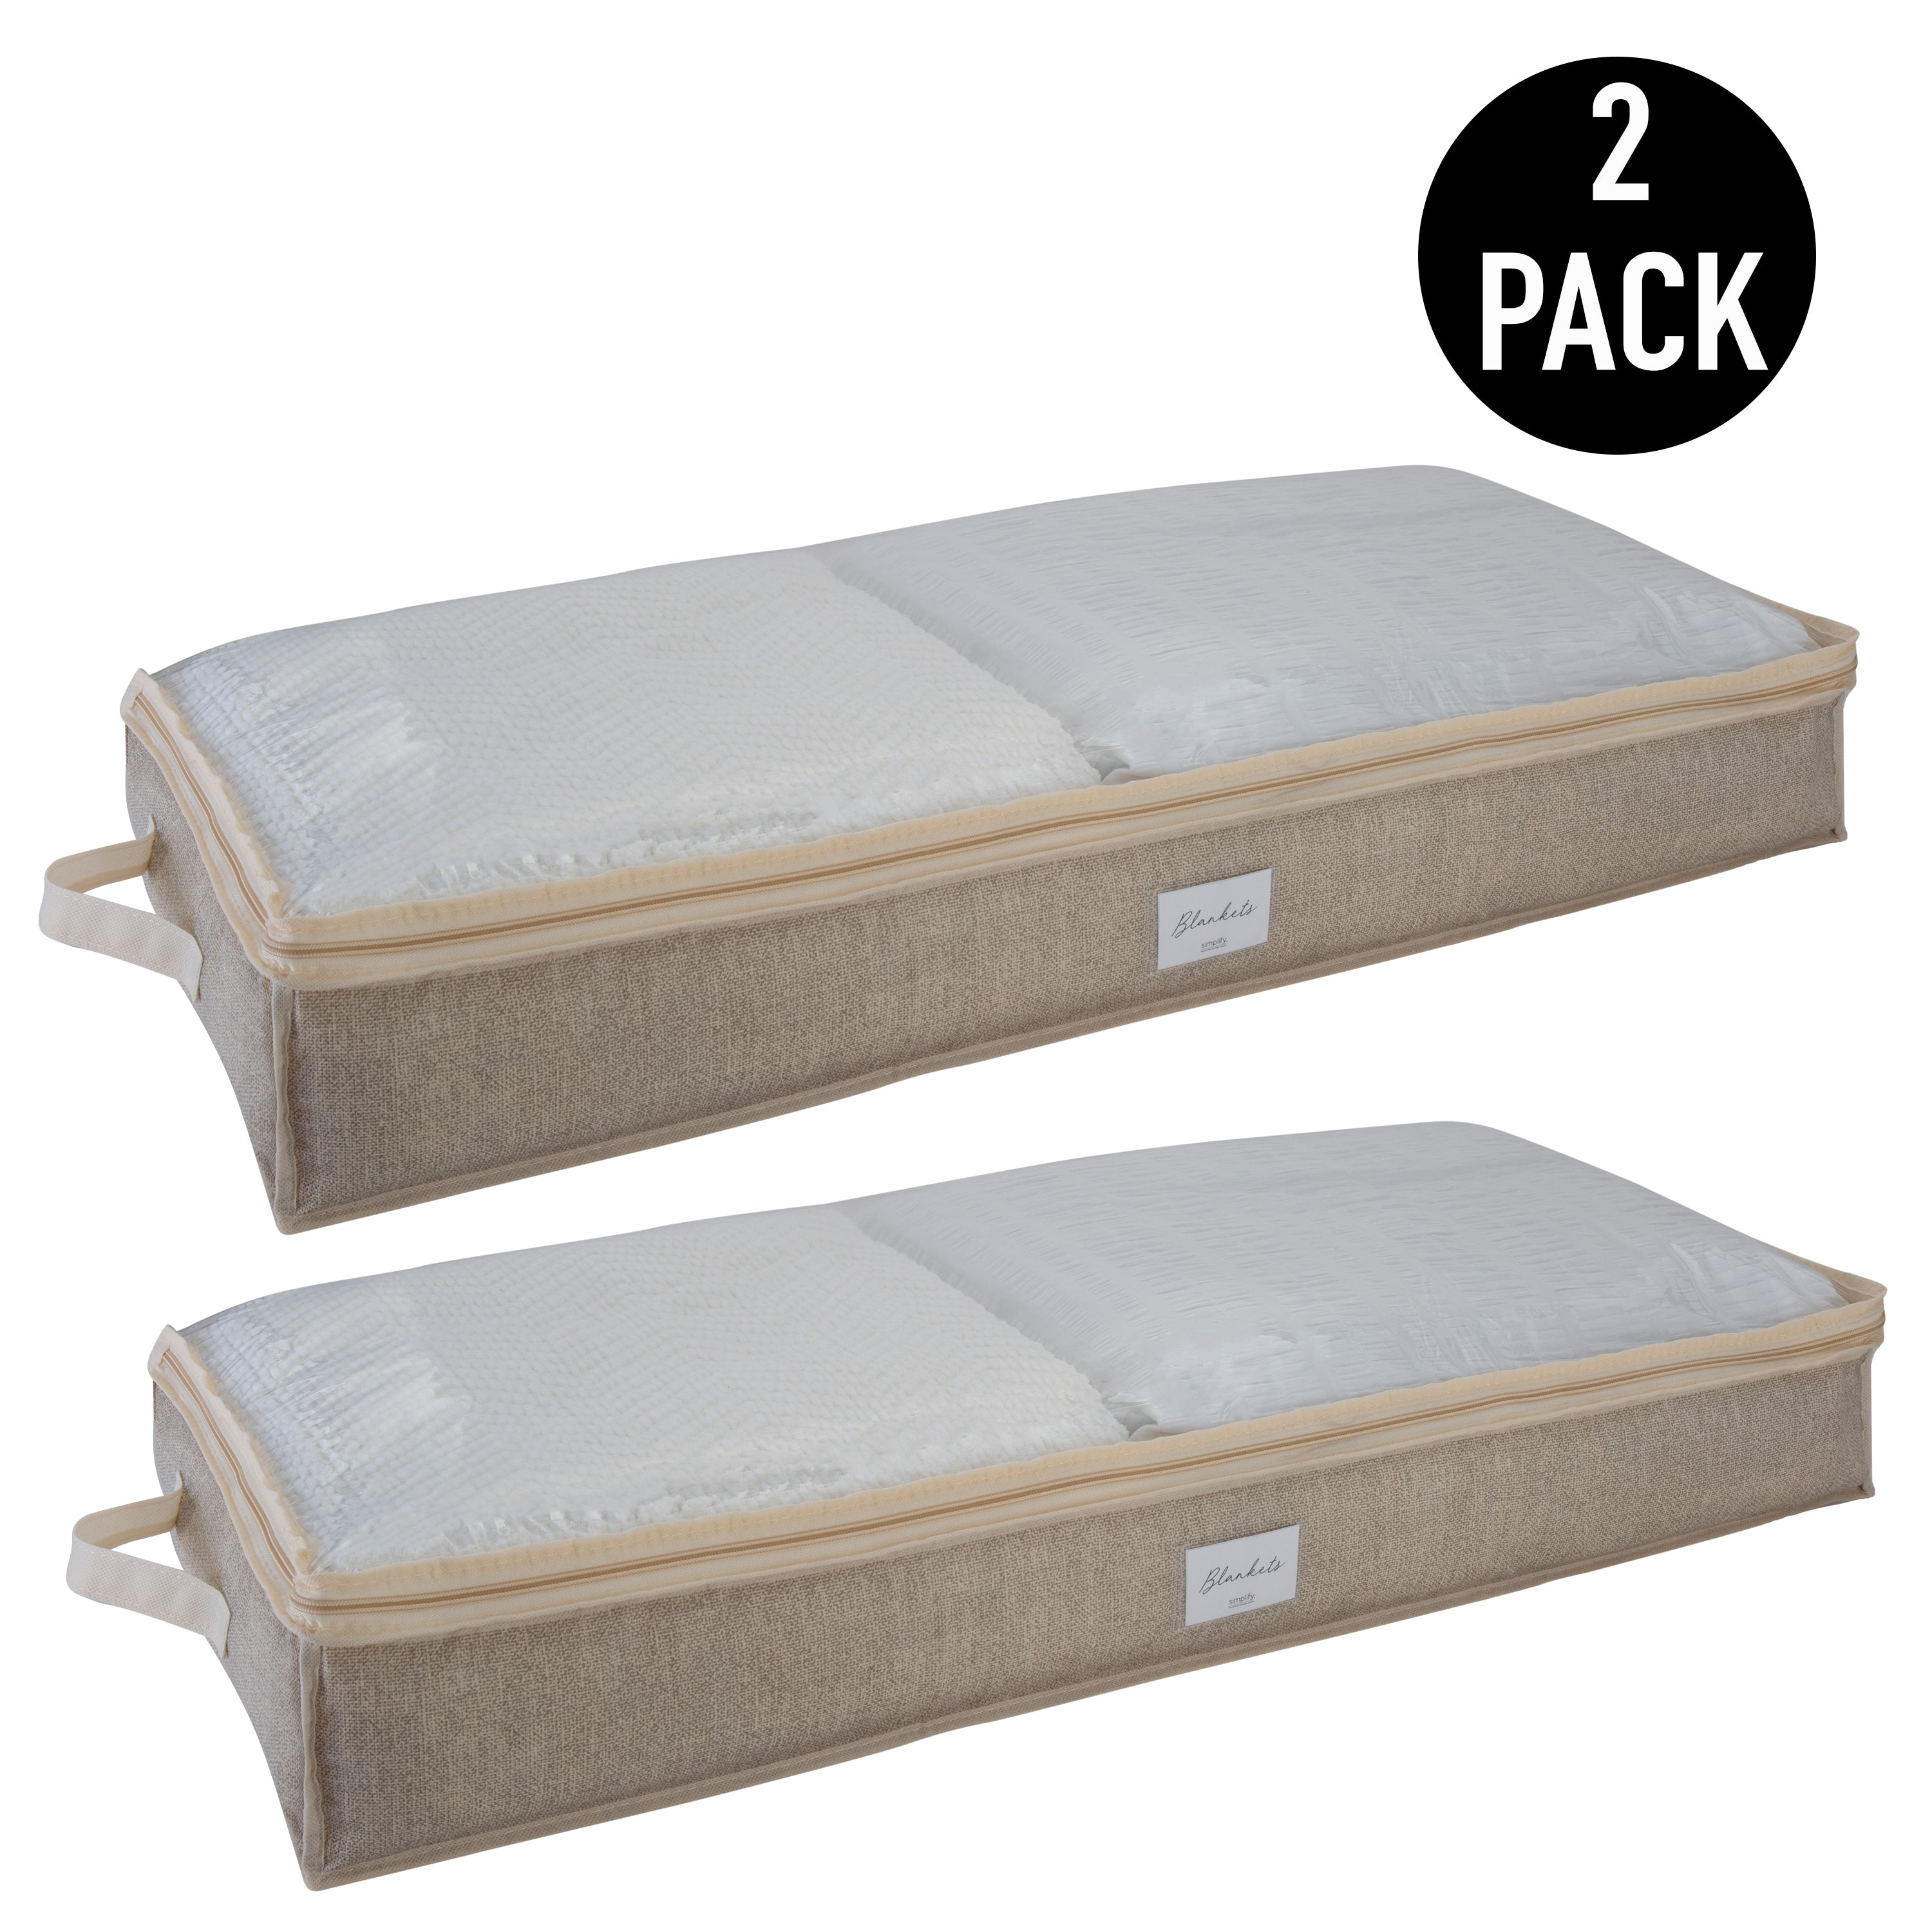 Simplify 2 Pack Under the Bed Storage Bag in Beige